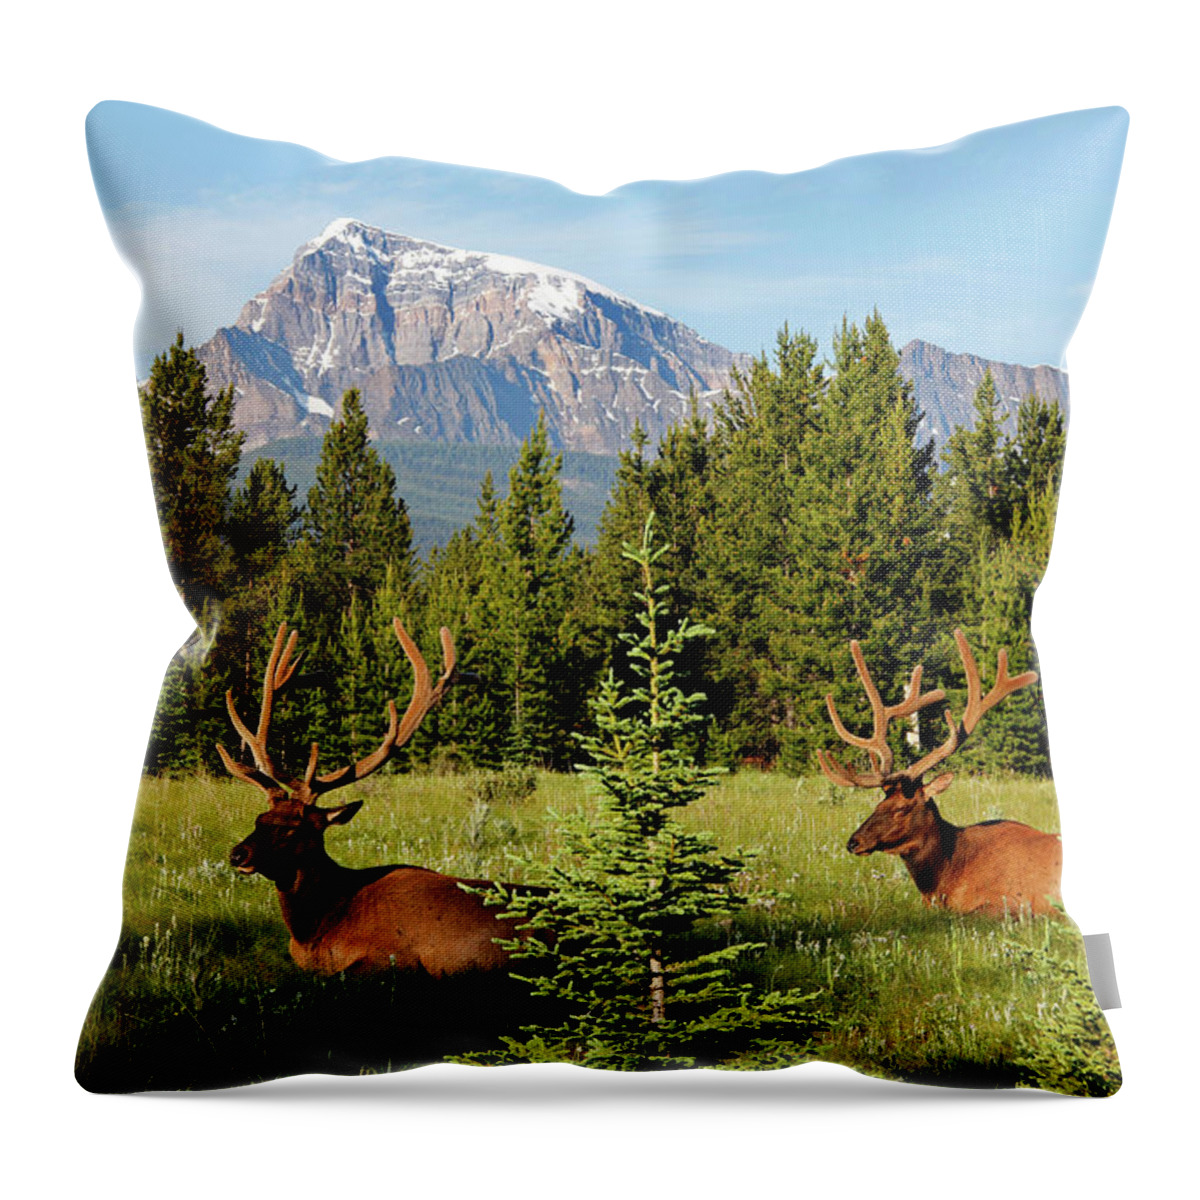 Grass Throw Pillow featuring the photograph Elks At Bow Valley, Banff Nationalpark by Hans-peter Merten